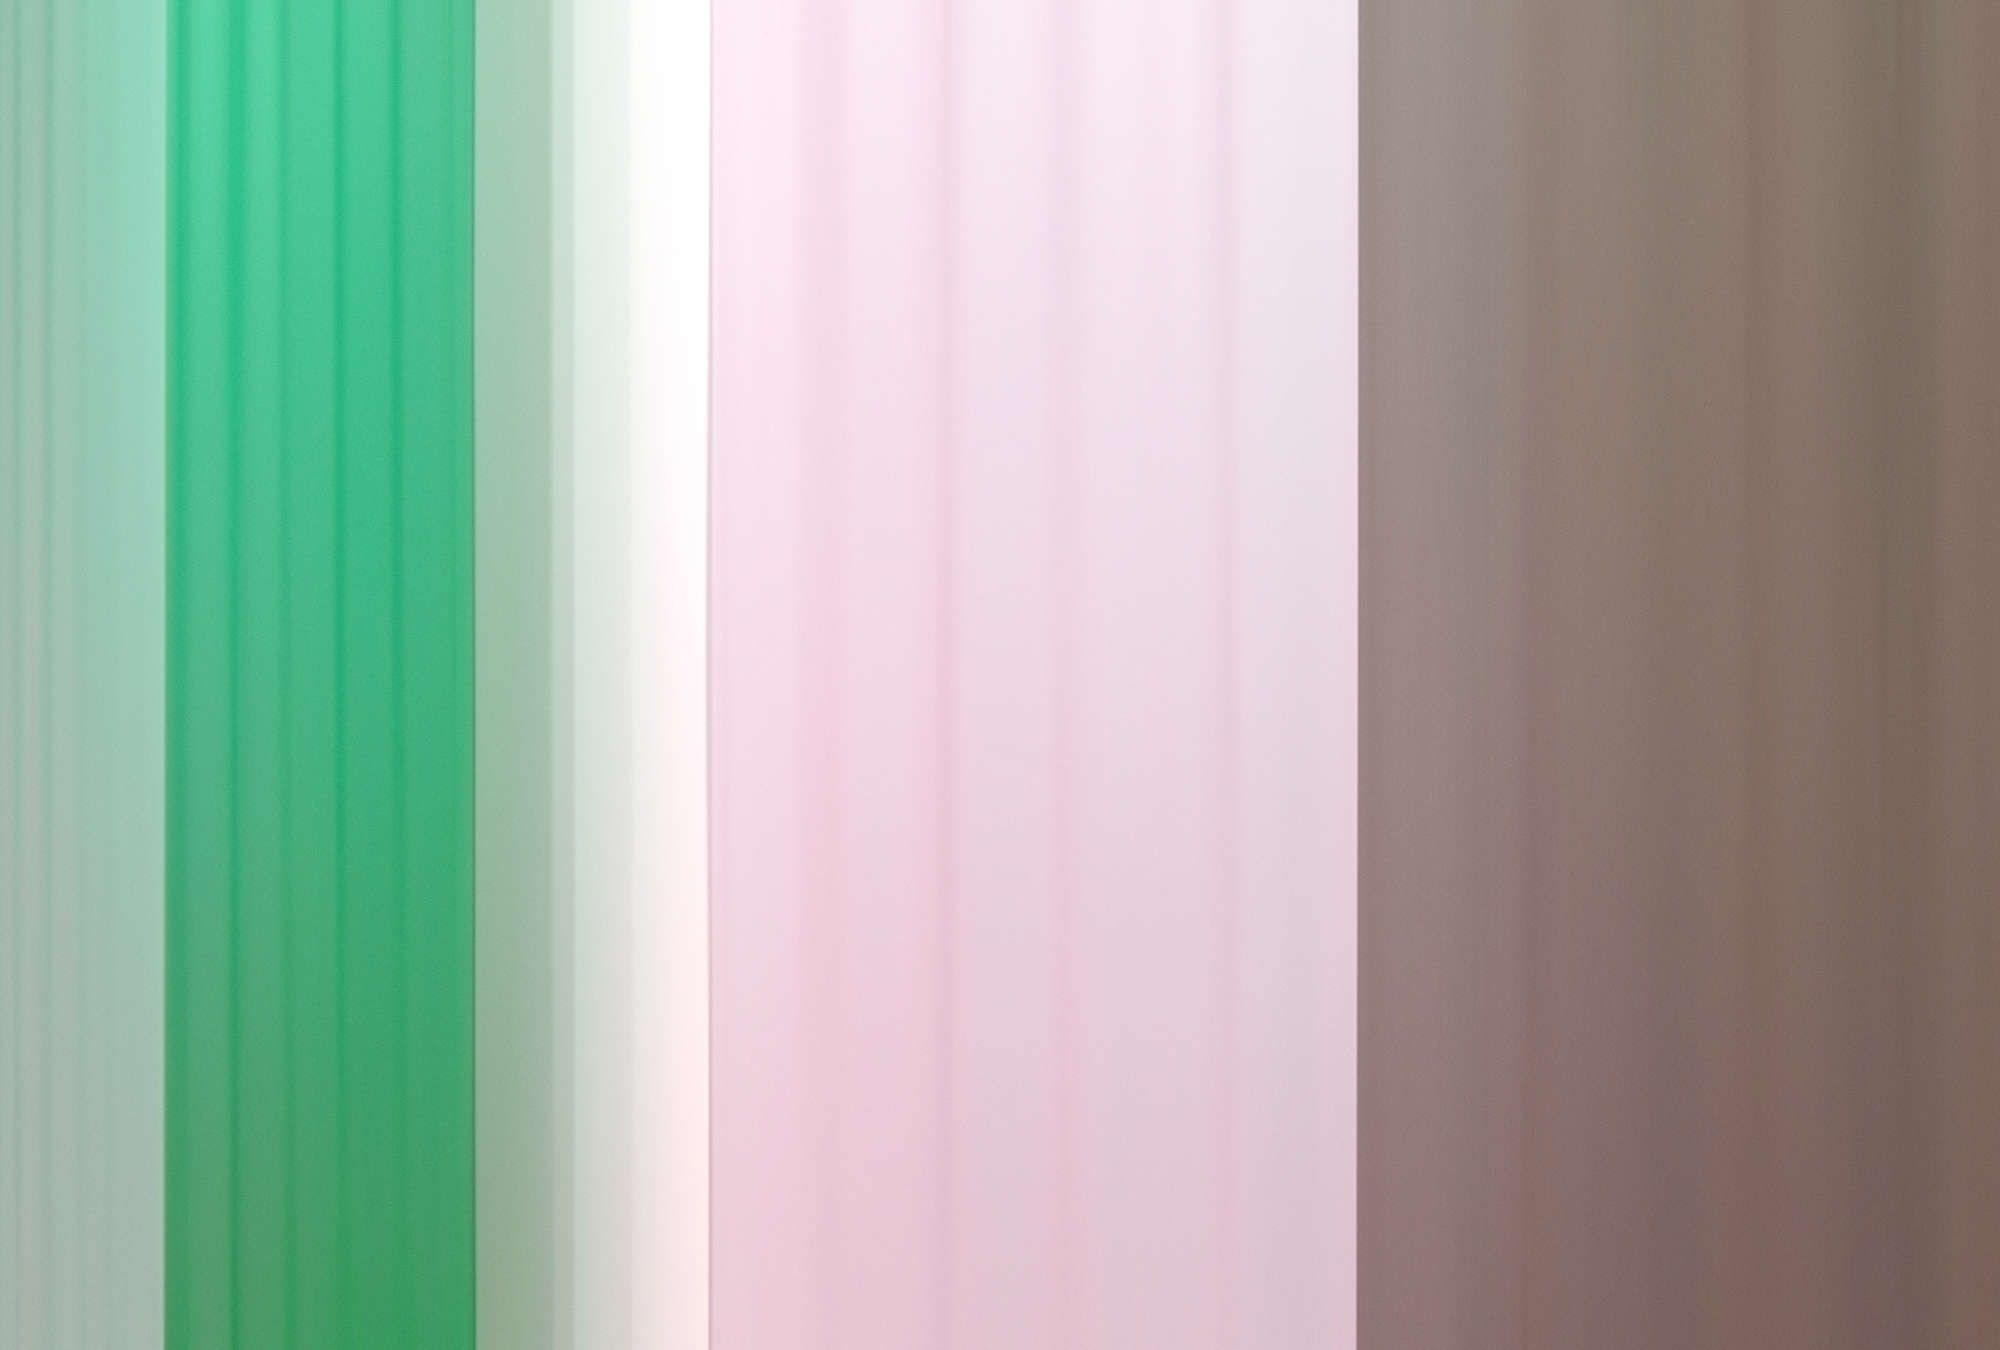             Photo wallpaper »co-coloures 1« - colour gradient with stripes - green pink, brown | matt, smooth non-woven
        